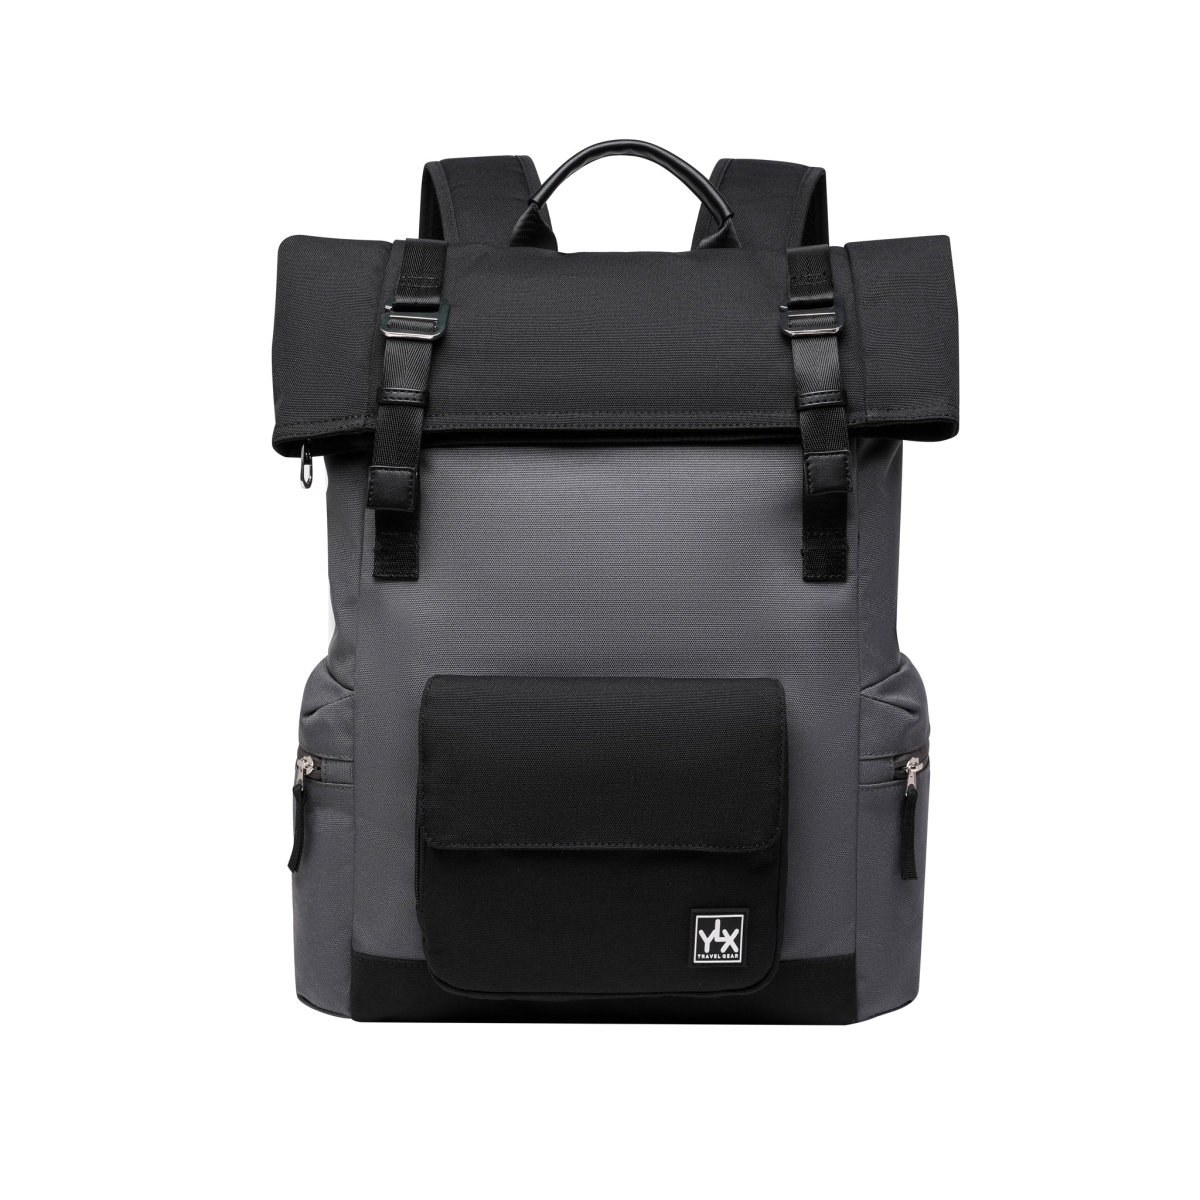 YLX Original Backpack 2.0 | Dark Grey & Black